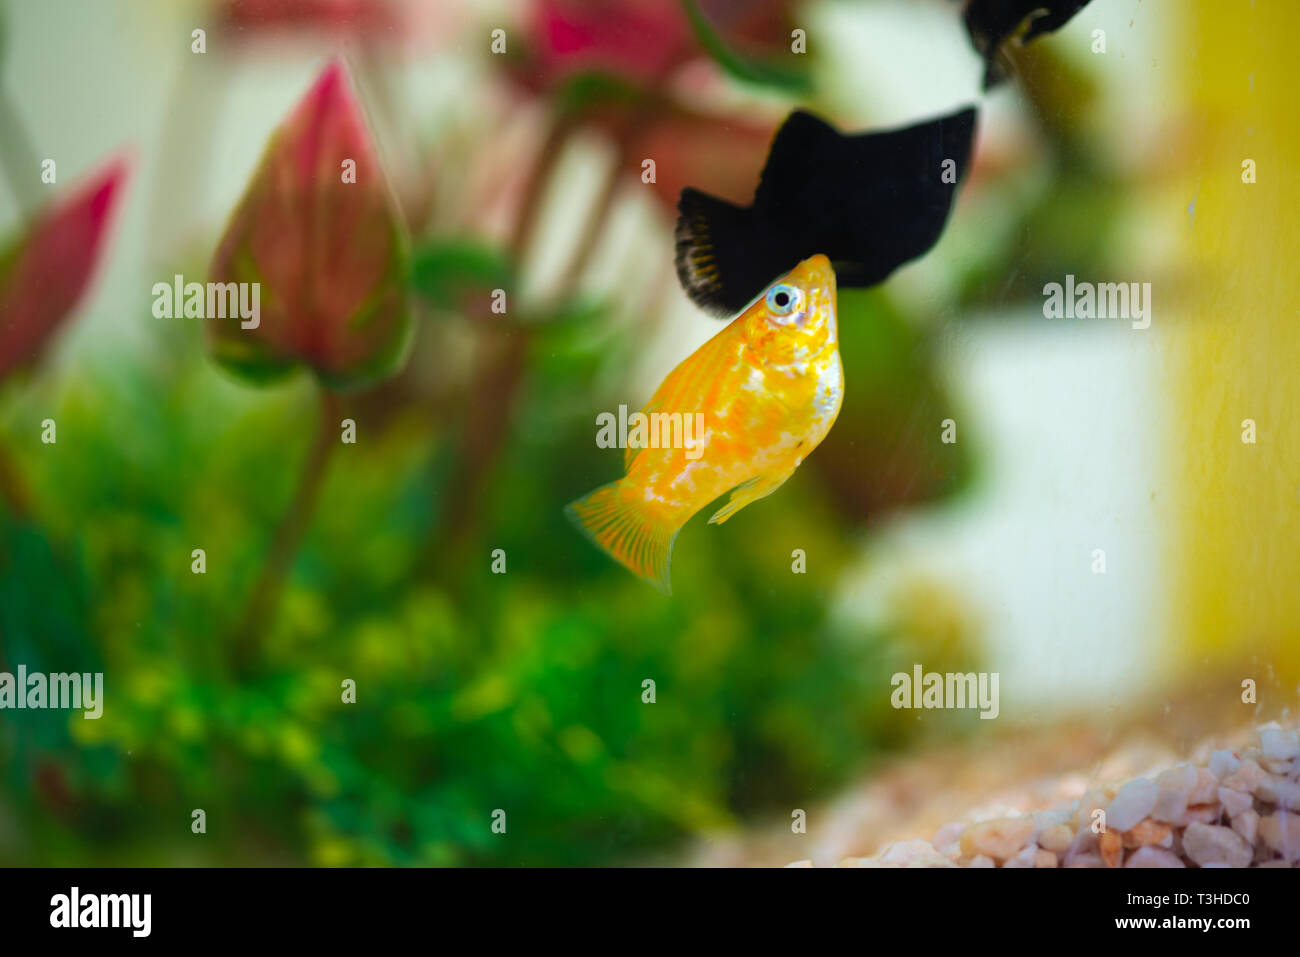 Little Molly fish, Poecilia latipinna in fish tank or aquarium, underwater life concept. Stock Photo